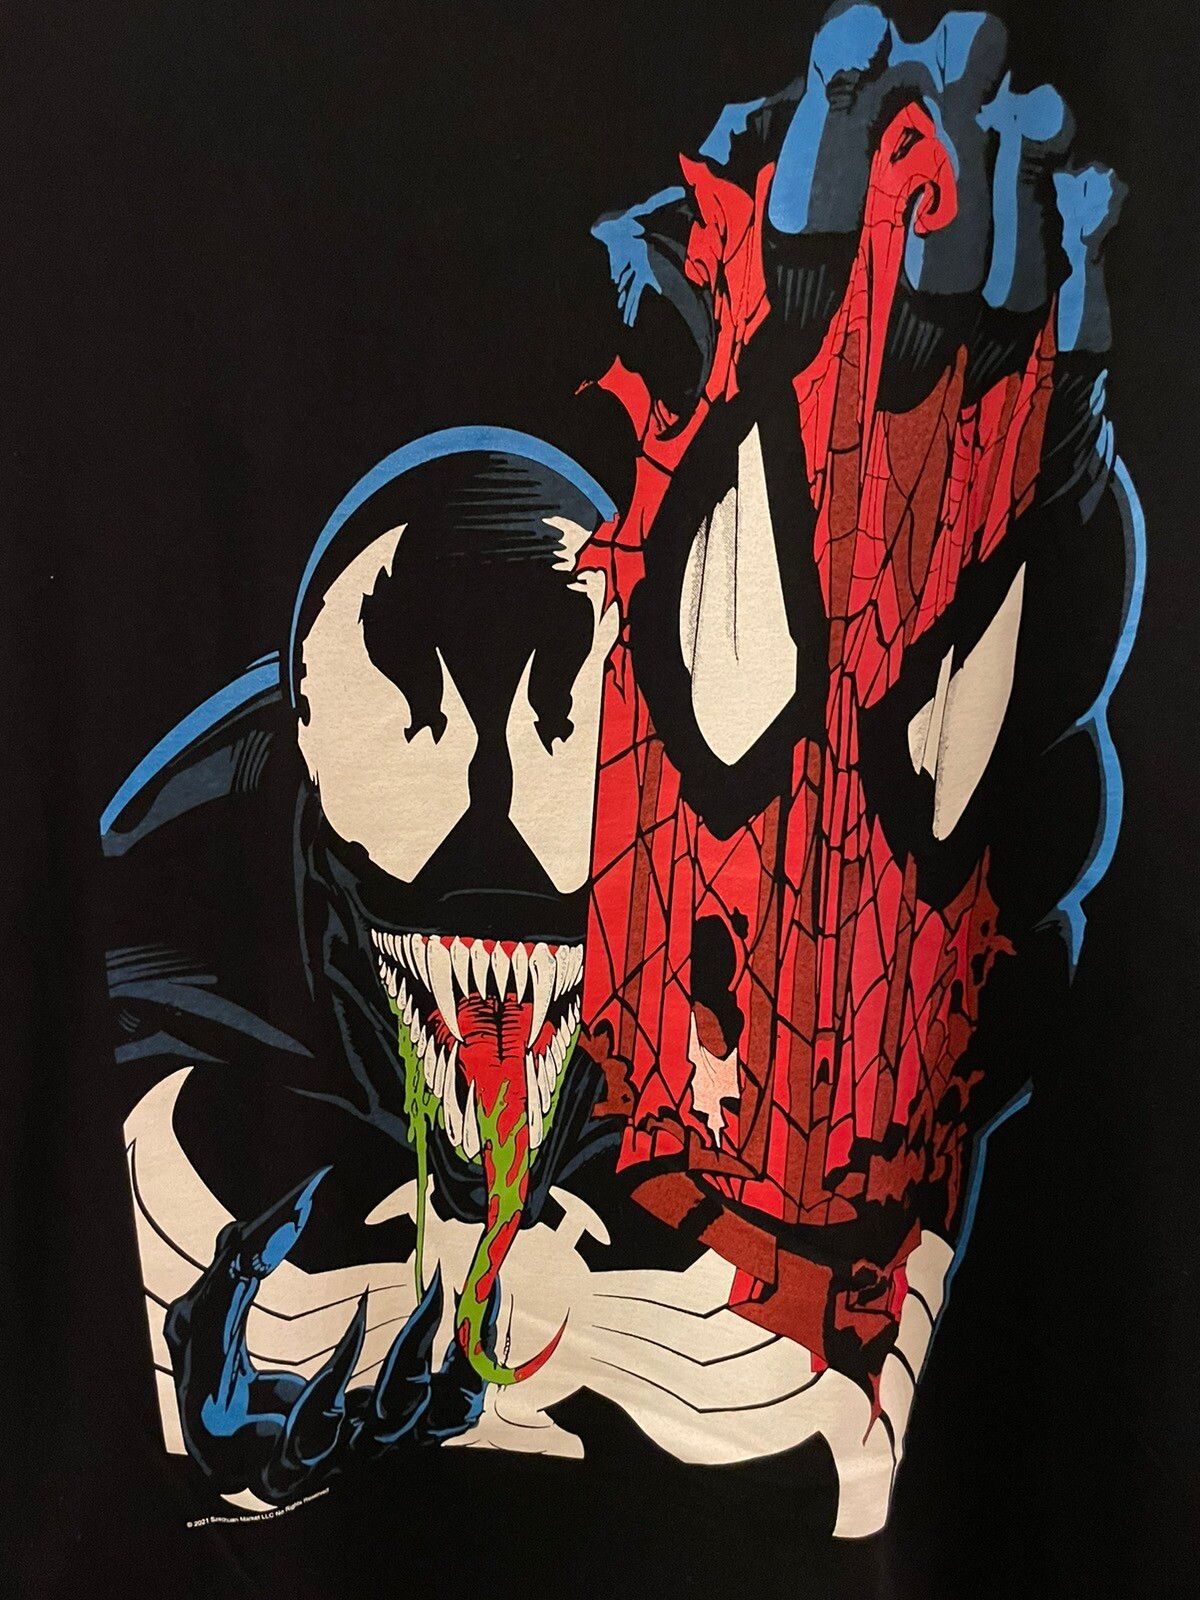 cyber y2k Spiderman Venom Tribal Reflective stretch graphic t-shirt mens  small